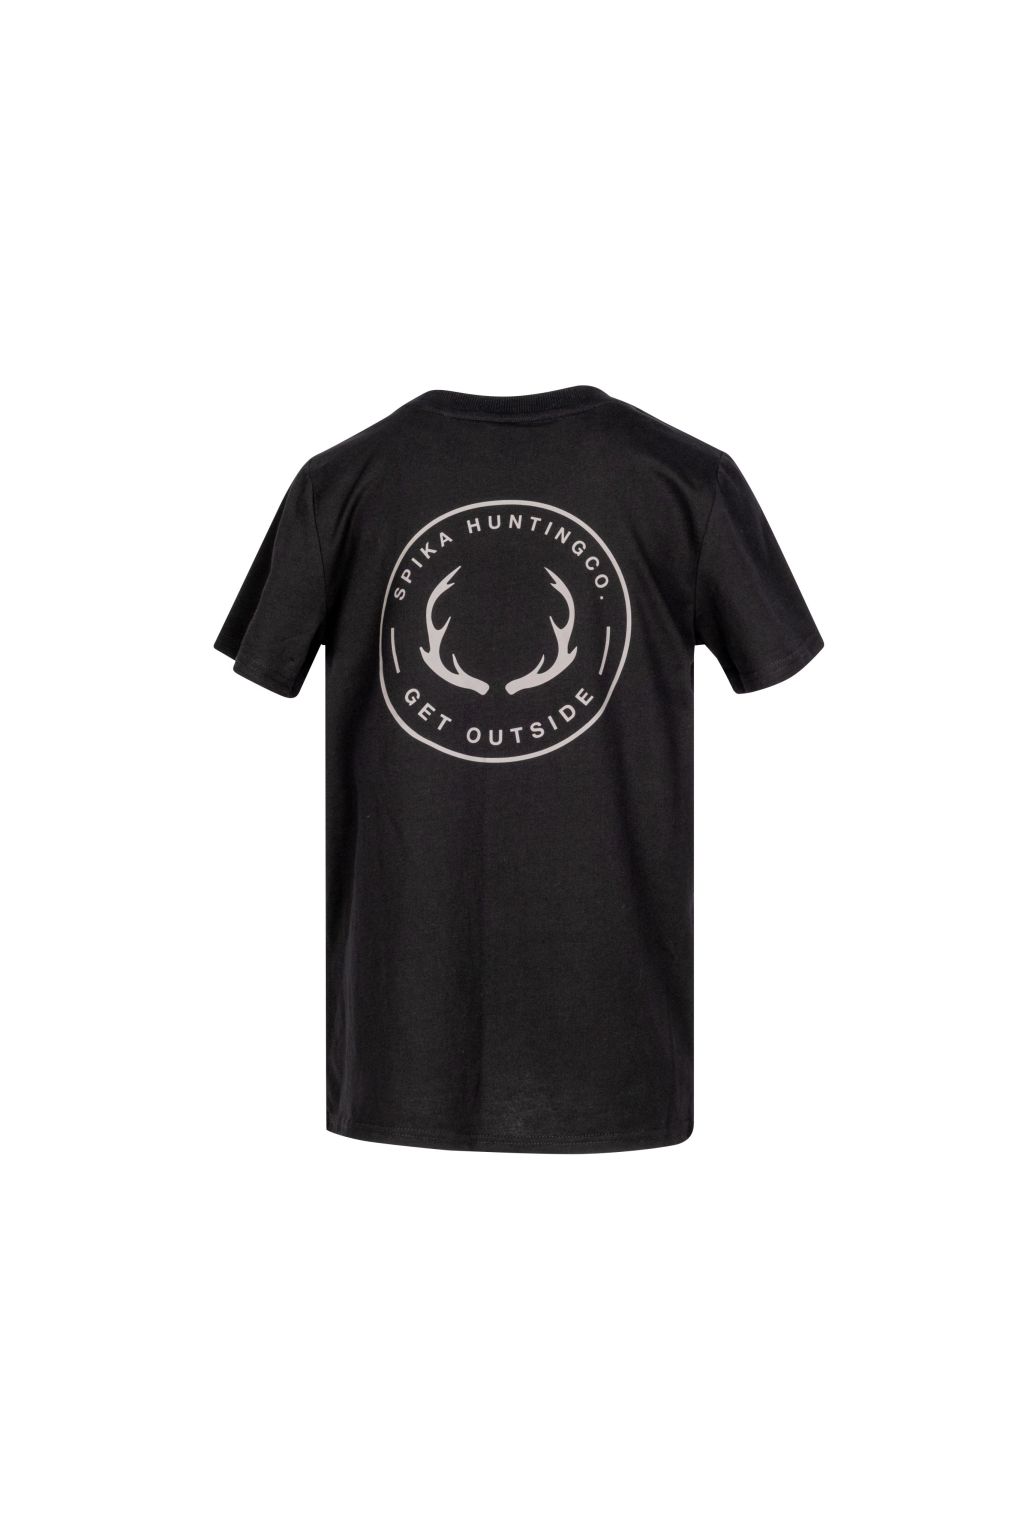 Spika Go Advance Kids T-Shirt - Black -  - Mansfield Hunting & Fishing - Products to prepare for Corona Virus